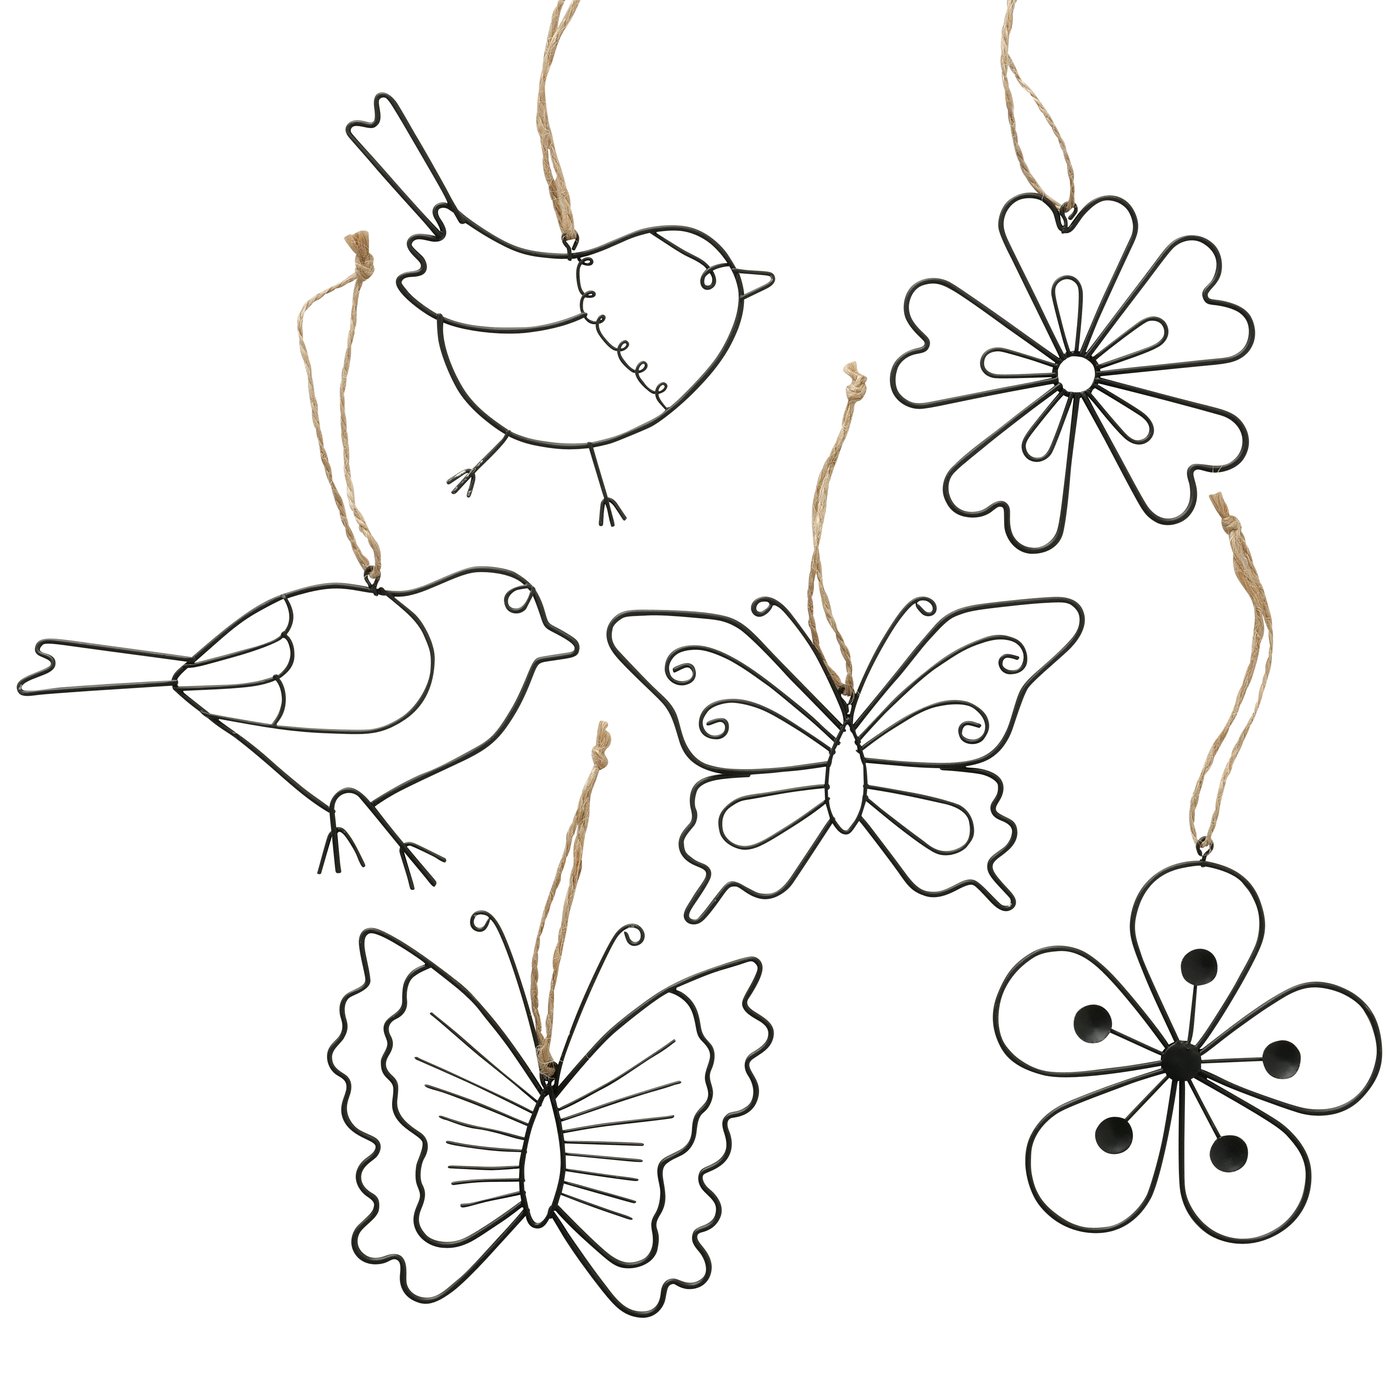 Metallhänger "Vogel, Schmetterling, Blume" 6er Set